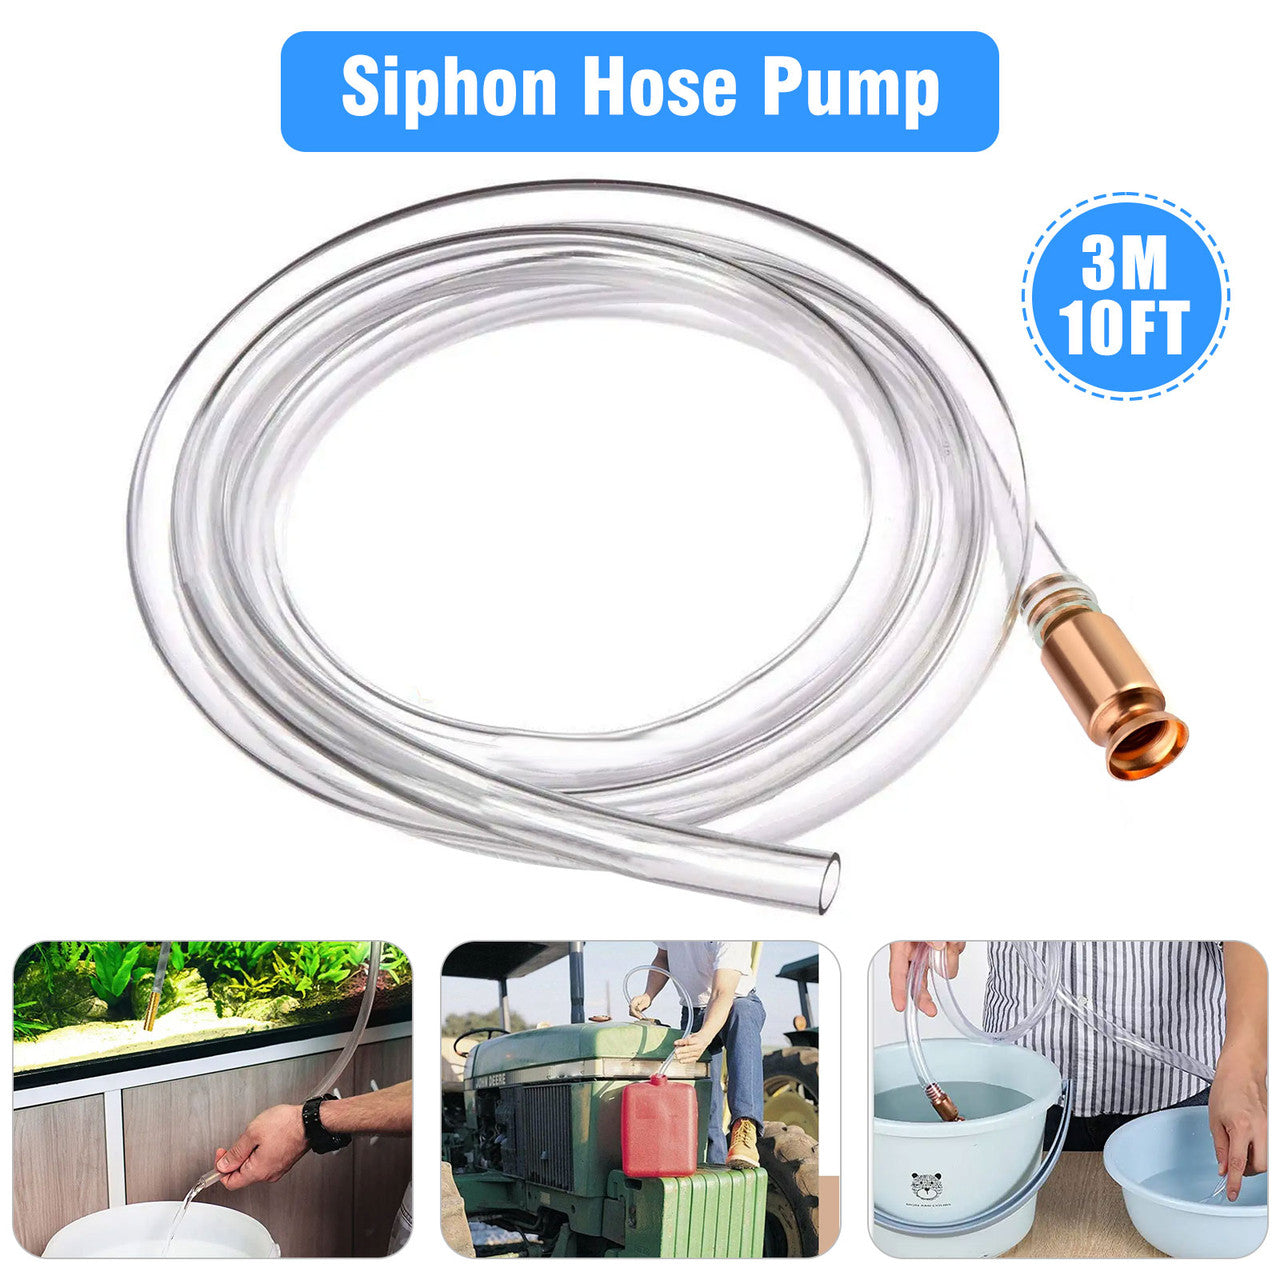 10FT Clear Siphon Hose - High Flow Hand Siphon Pump Gasoline Siphon Hose, Oil Water Fuel Transfer Siphon Pump